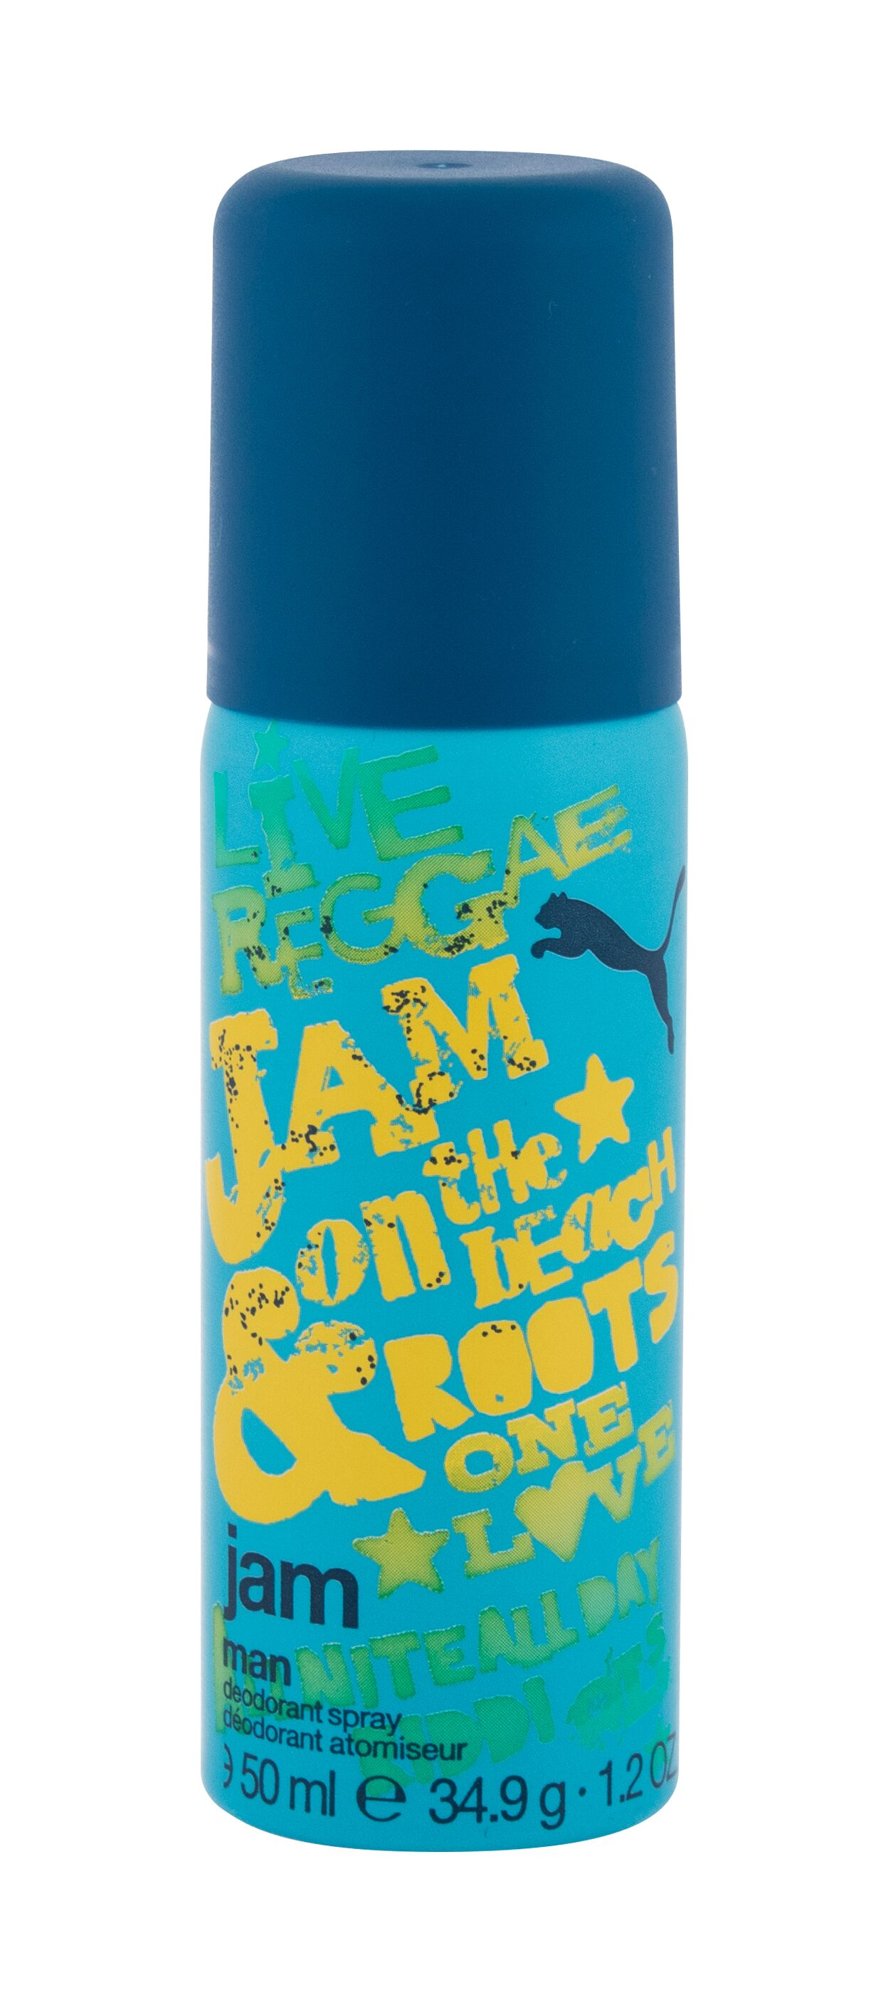 Puma Jam Man dezodorantas